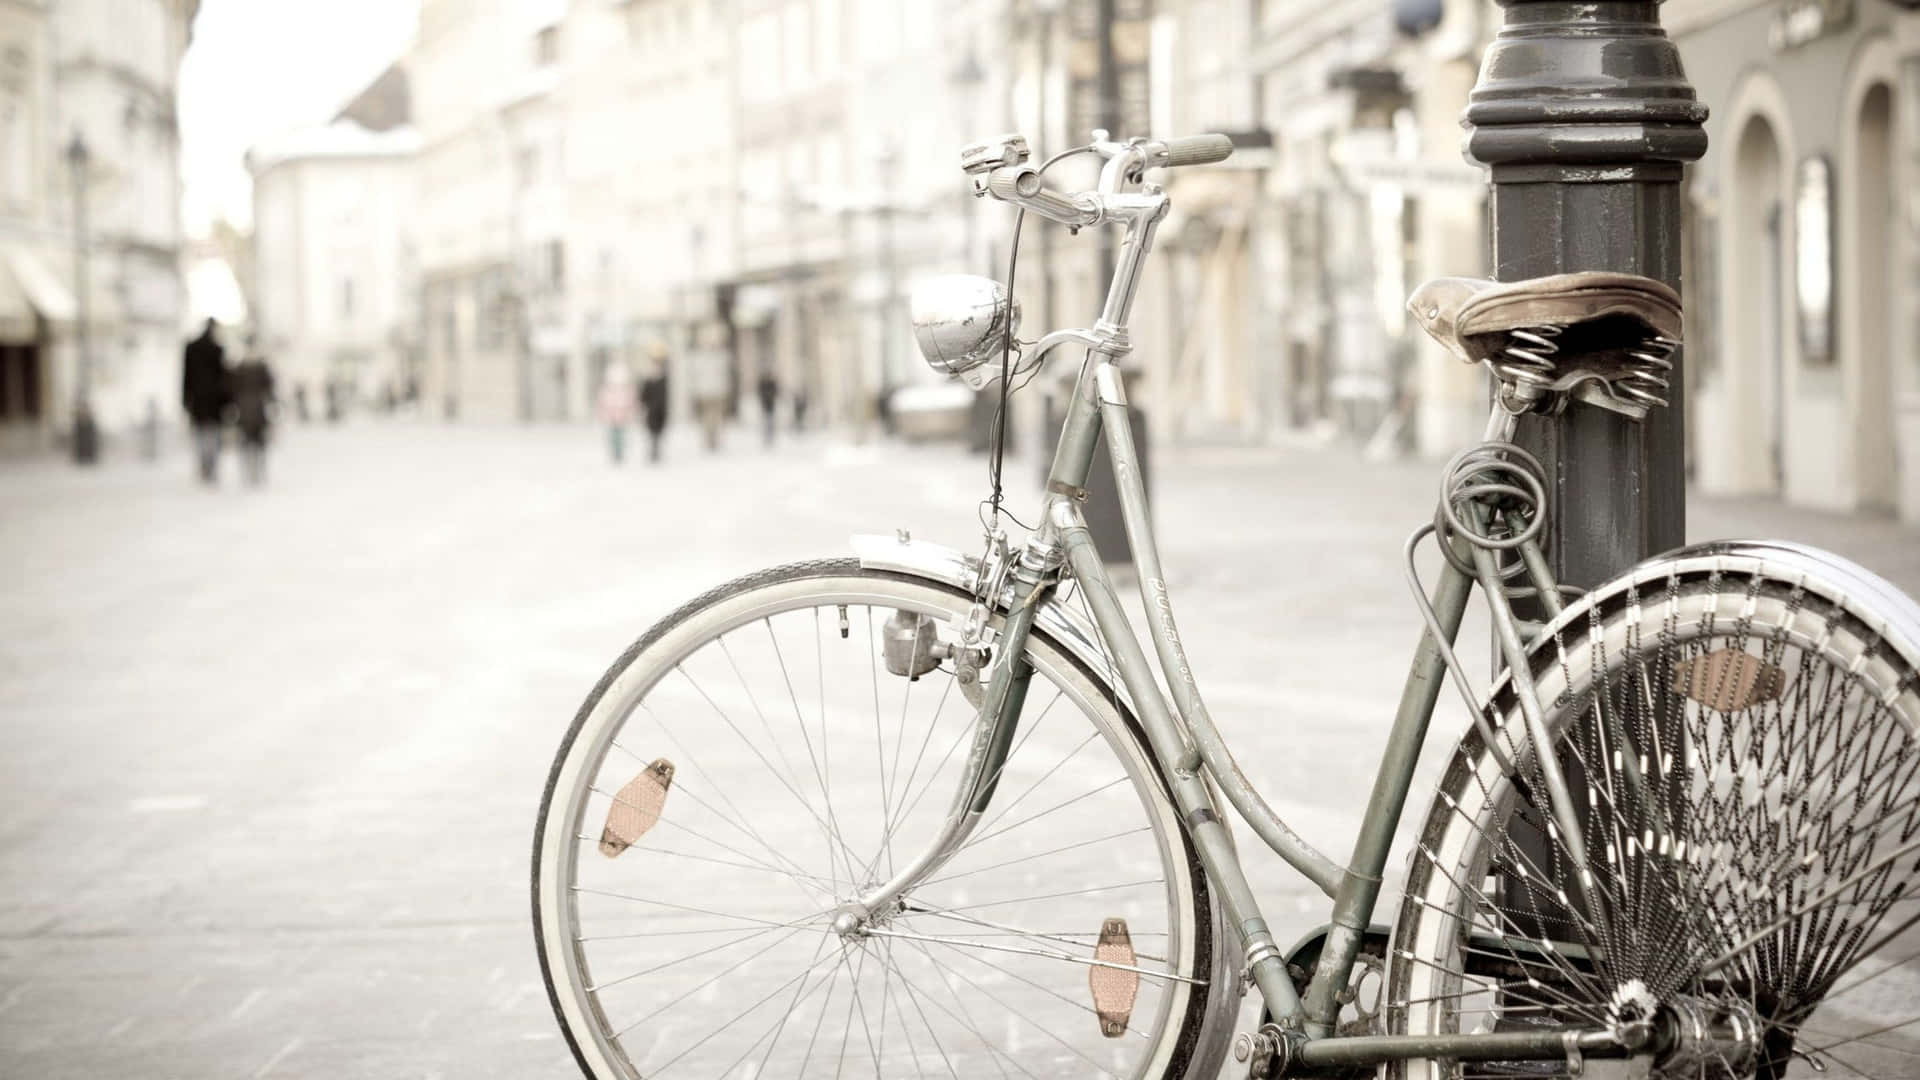 Bicicletaurbana Vintage Para Escritorio Fondo de pantalla